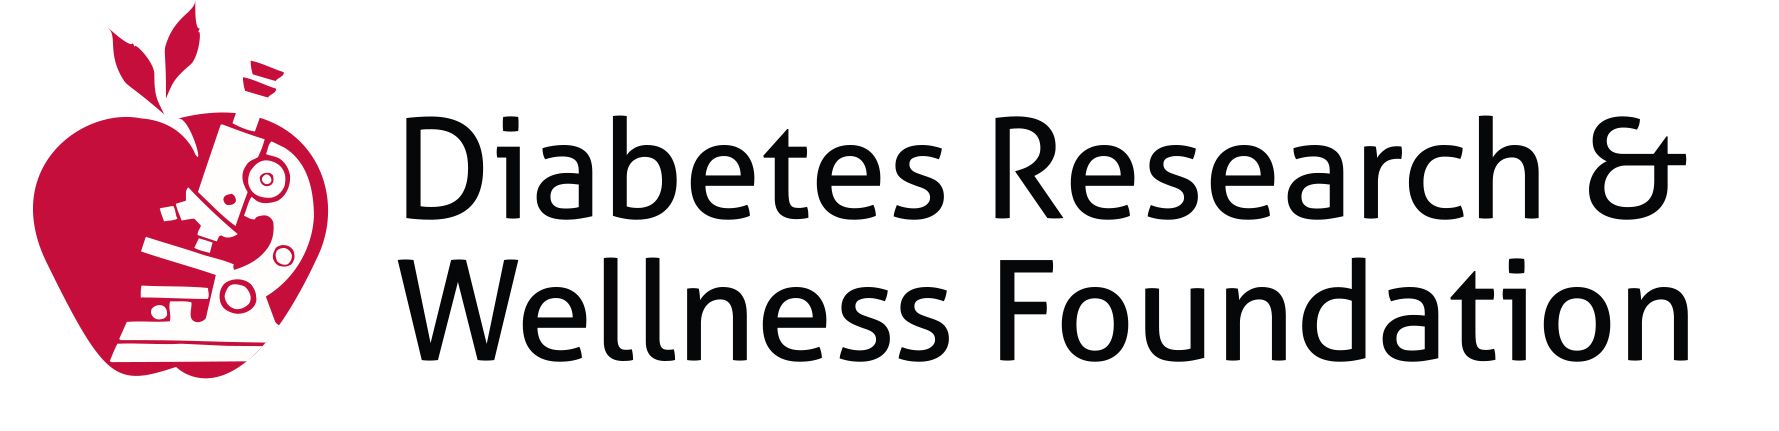 Diabetes Research & Wellness Foundation